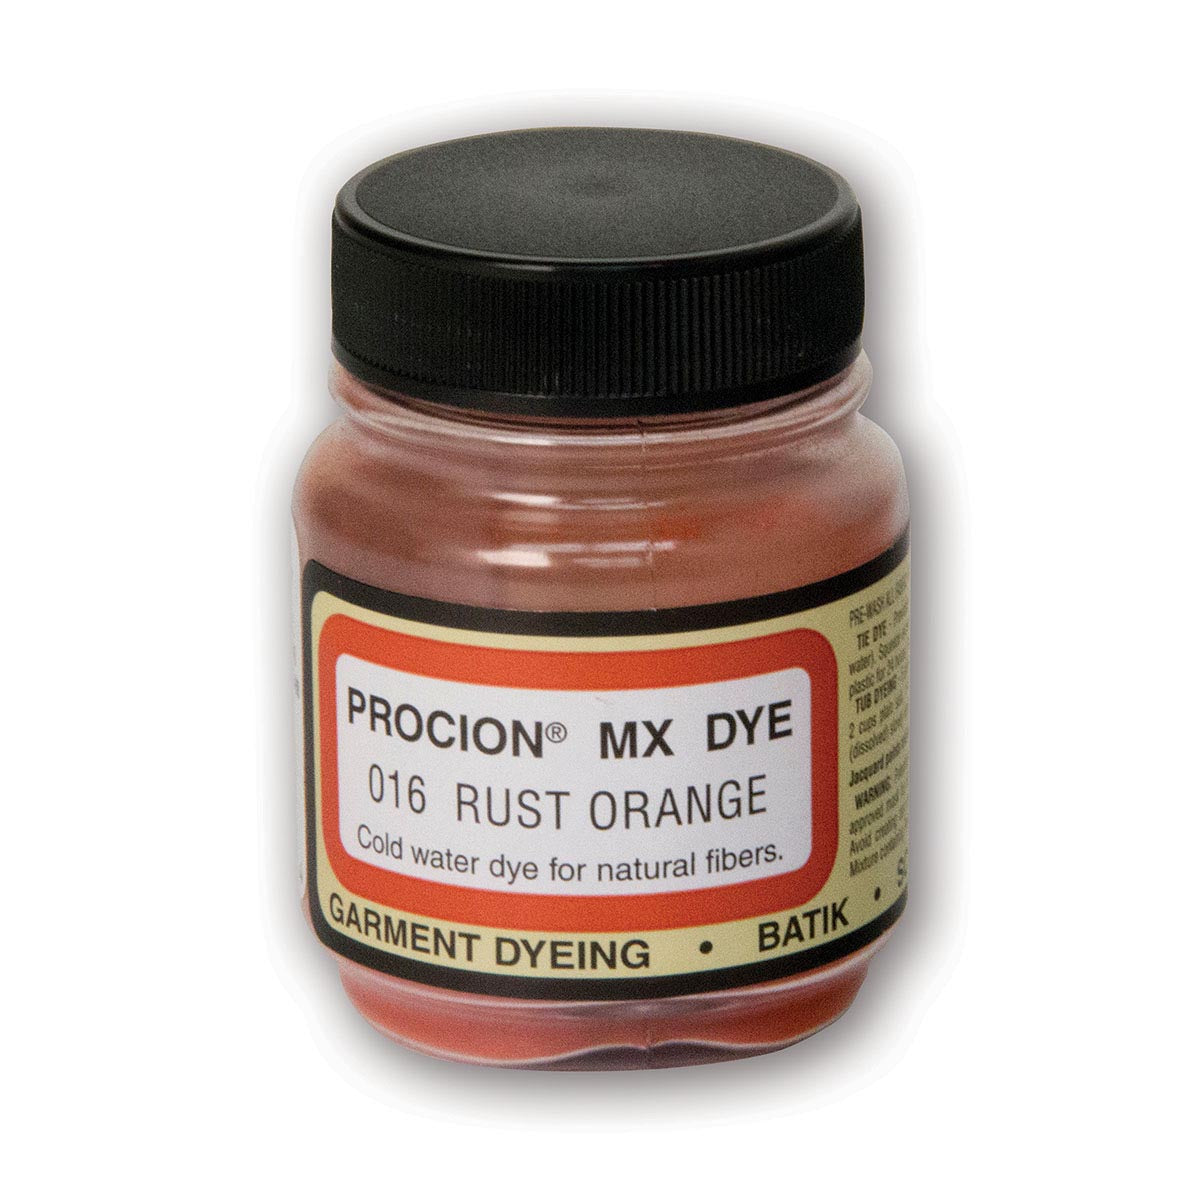 Jacquard - Procion MX Dye - Fabric Textile - Rust Orange 016